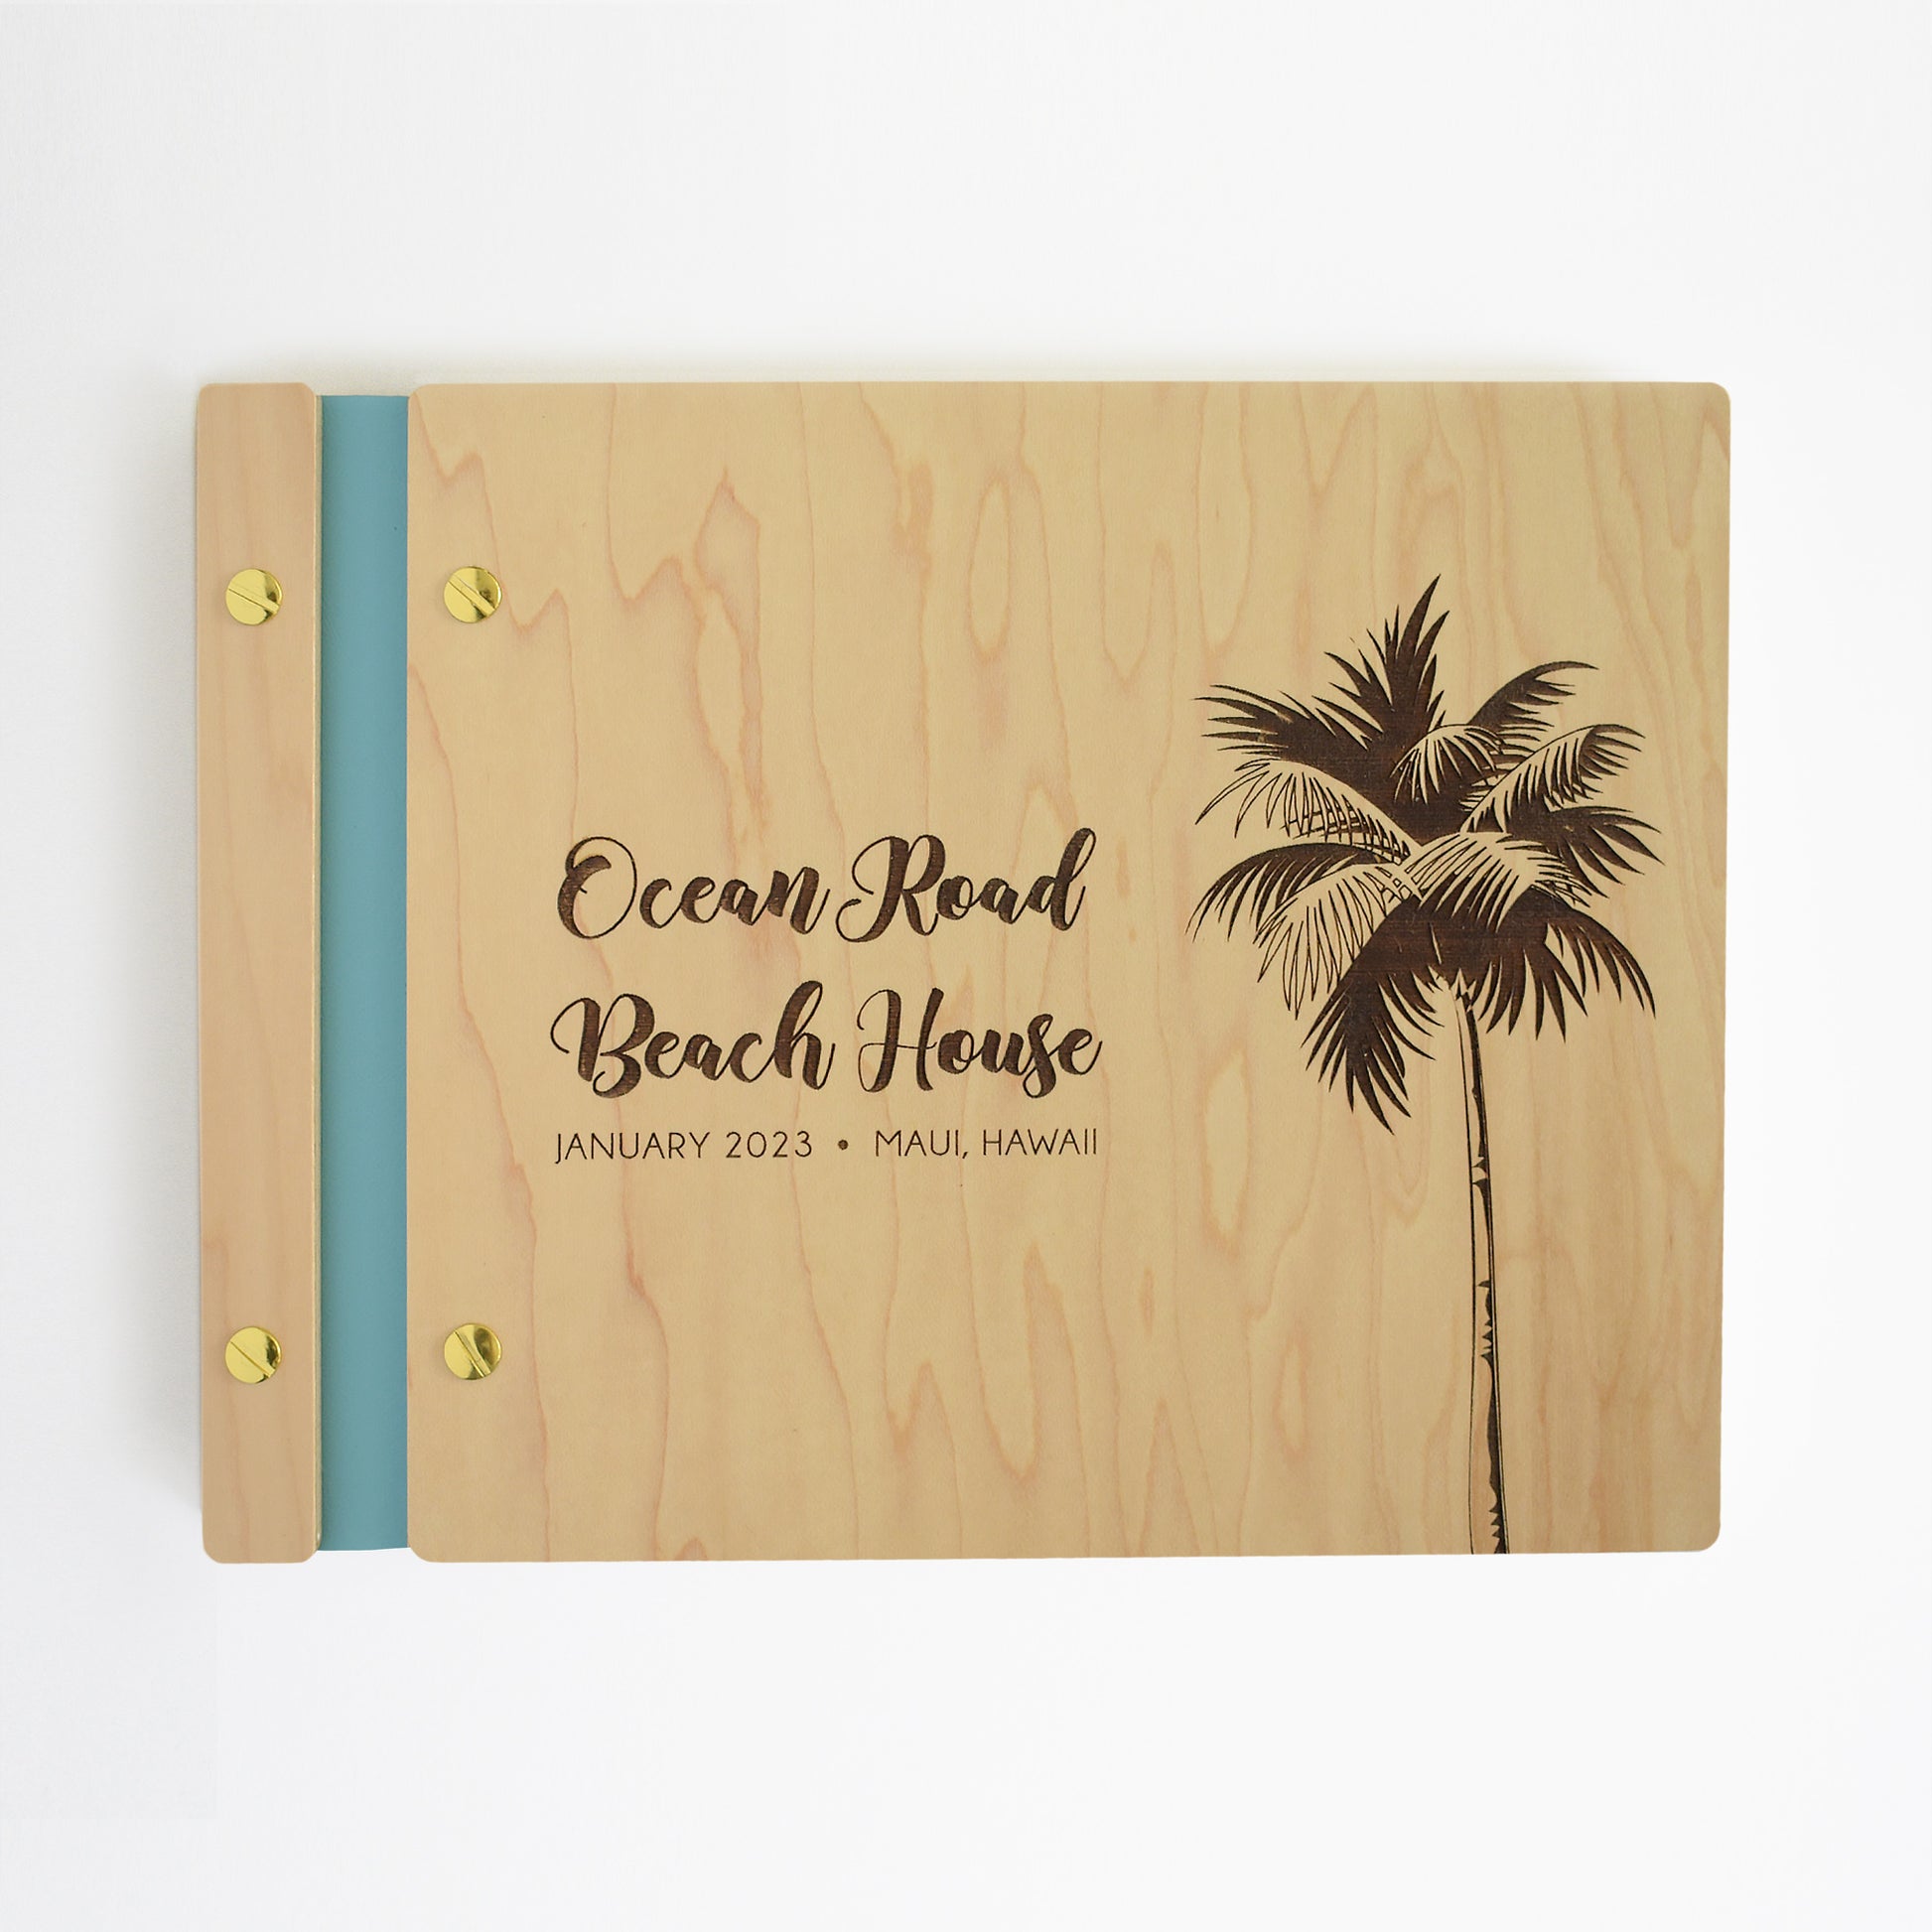 Custom Guest Book for Beach House, Beach Vacation Rental House